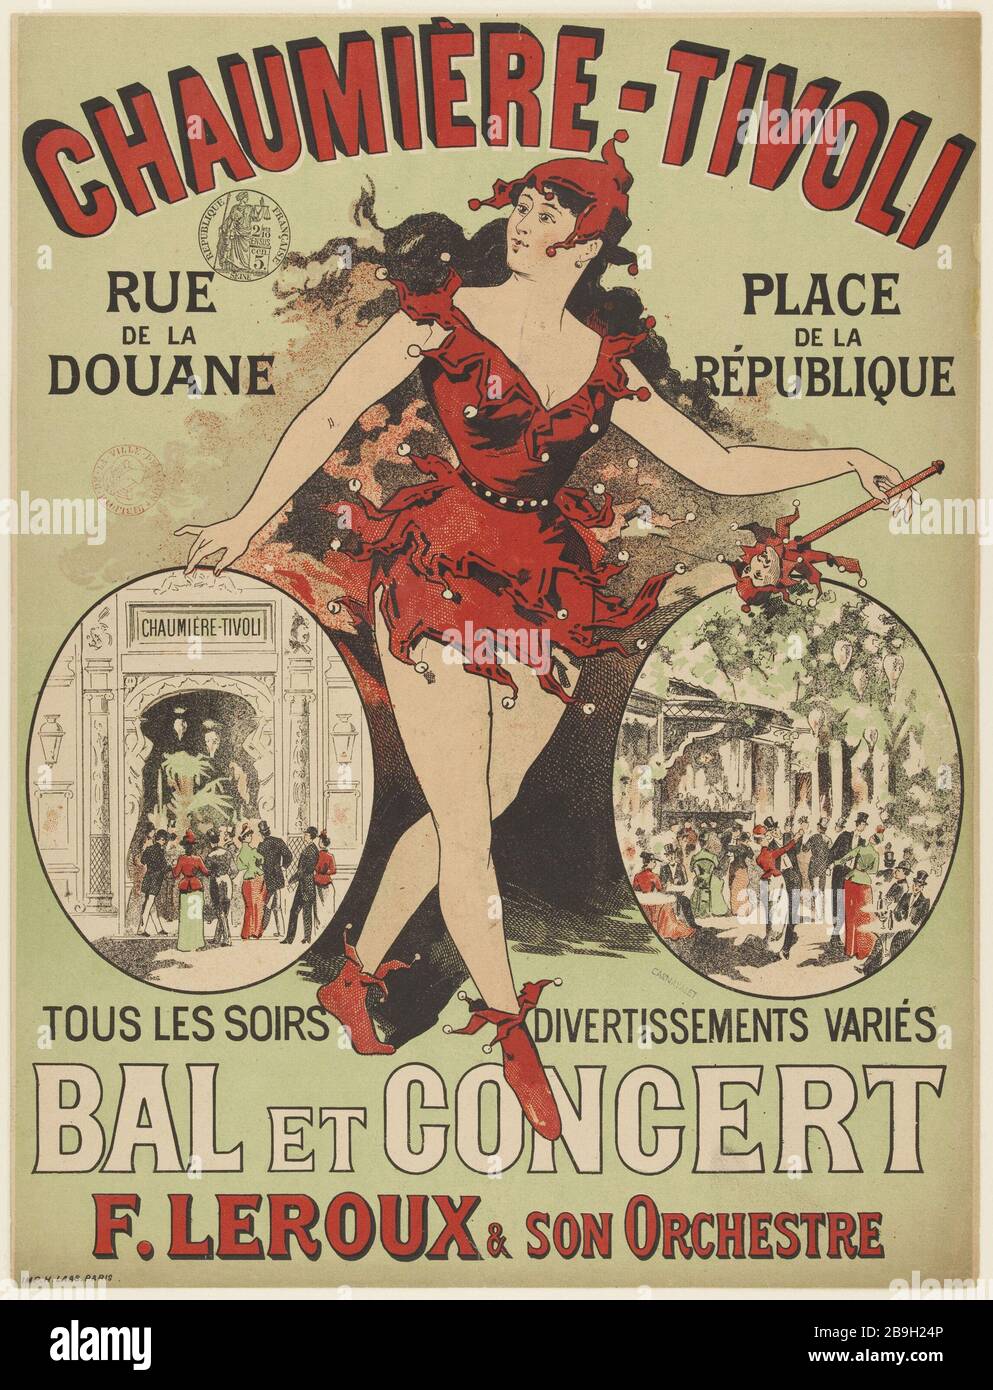 CHAUMIERE-TIVOLI, BAL und Concert Anonyme. "Chaumière-Tivoli". Lithographie. 1880-1900. Paris, musée Carnavalet. Stockfoto